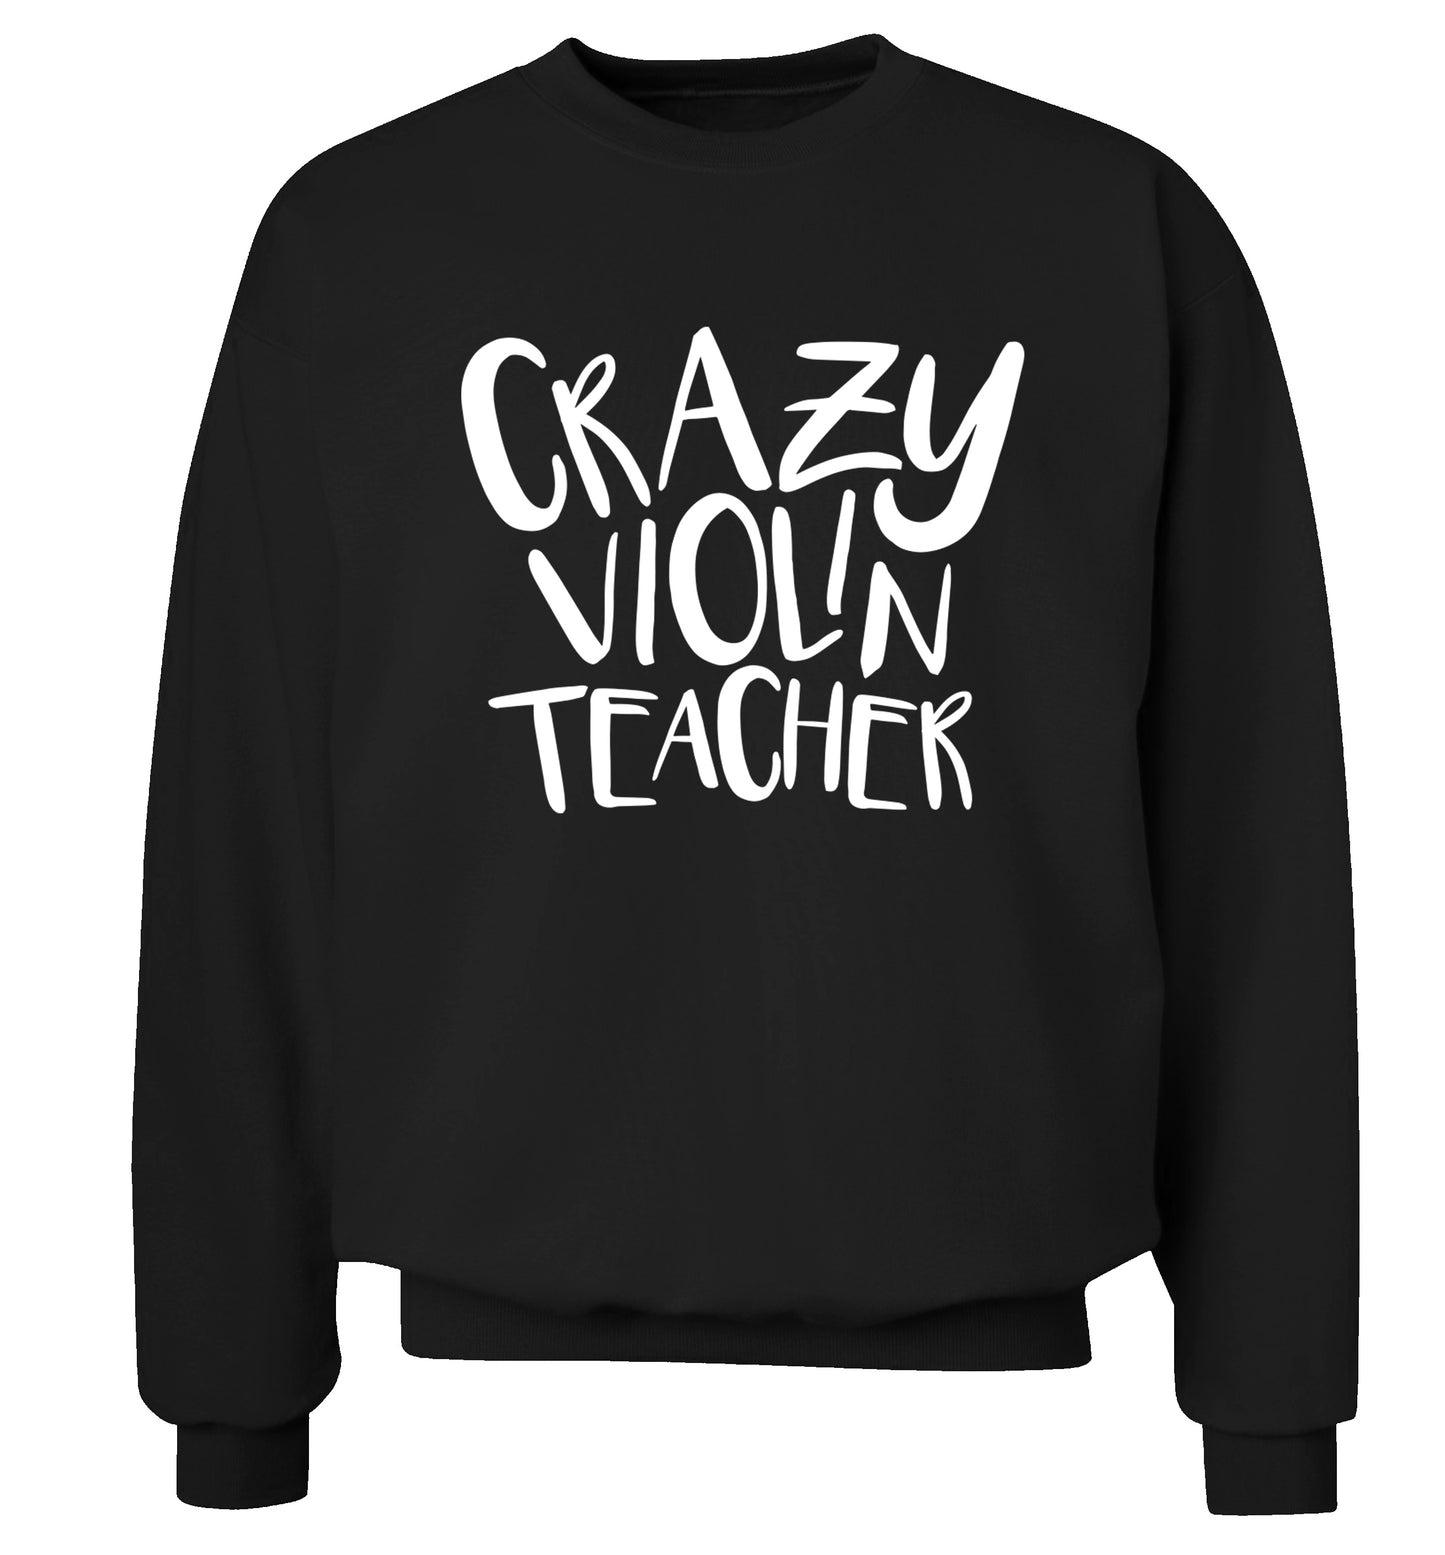 Crazy violin teacher Adult's unisex black Sweater 2XL